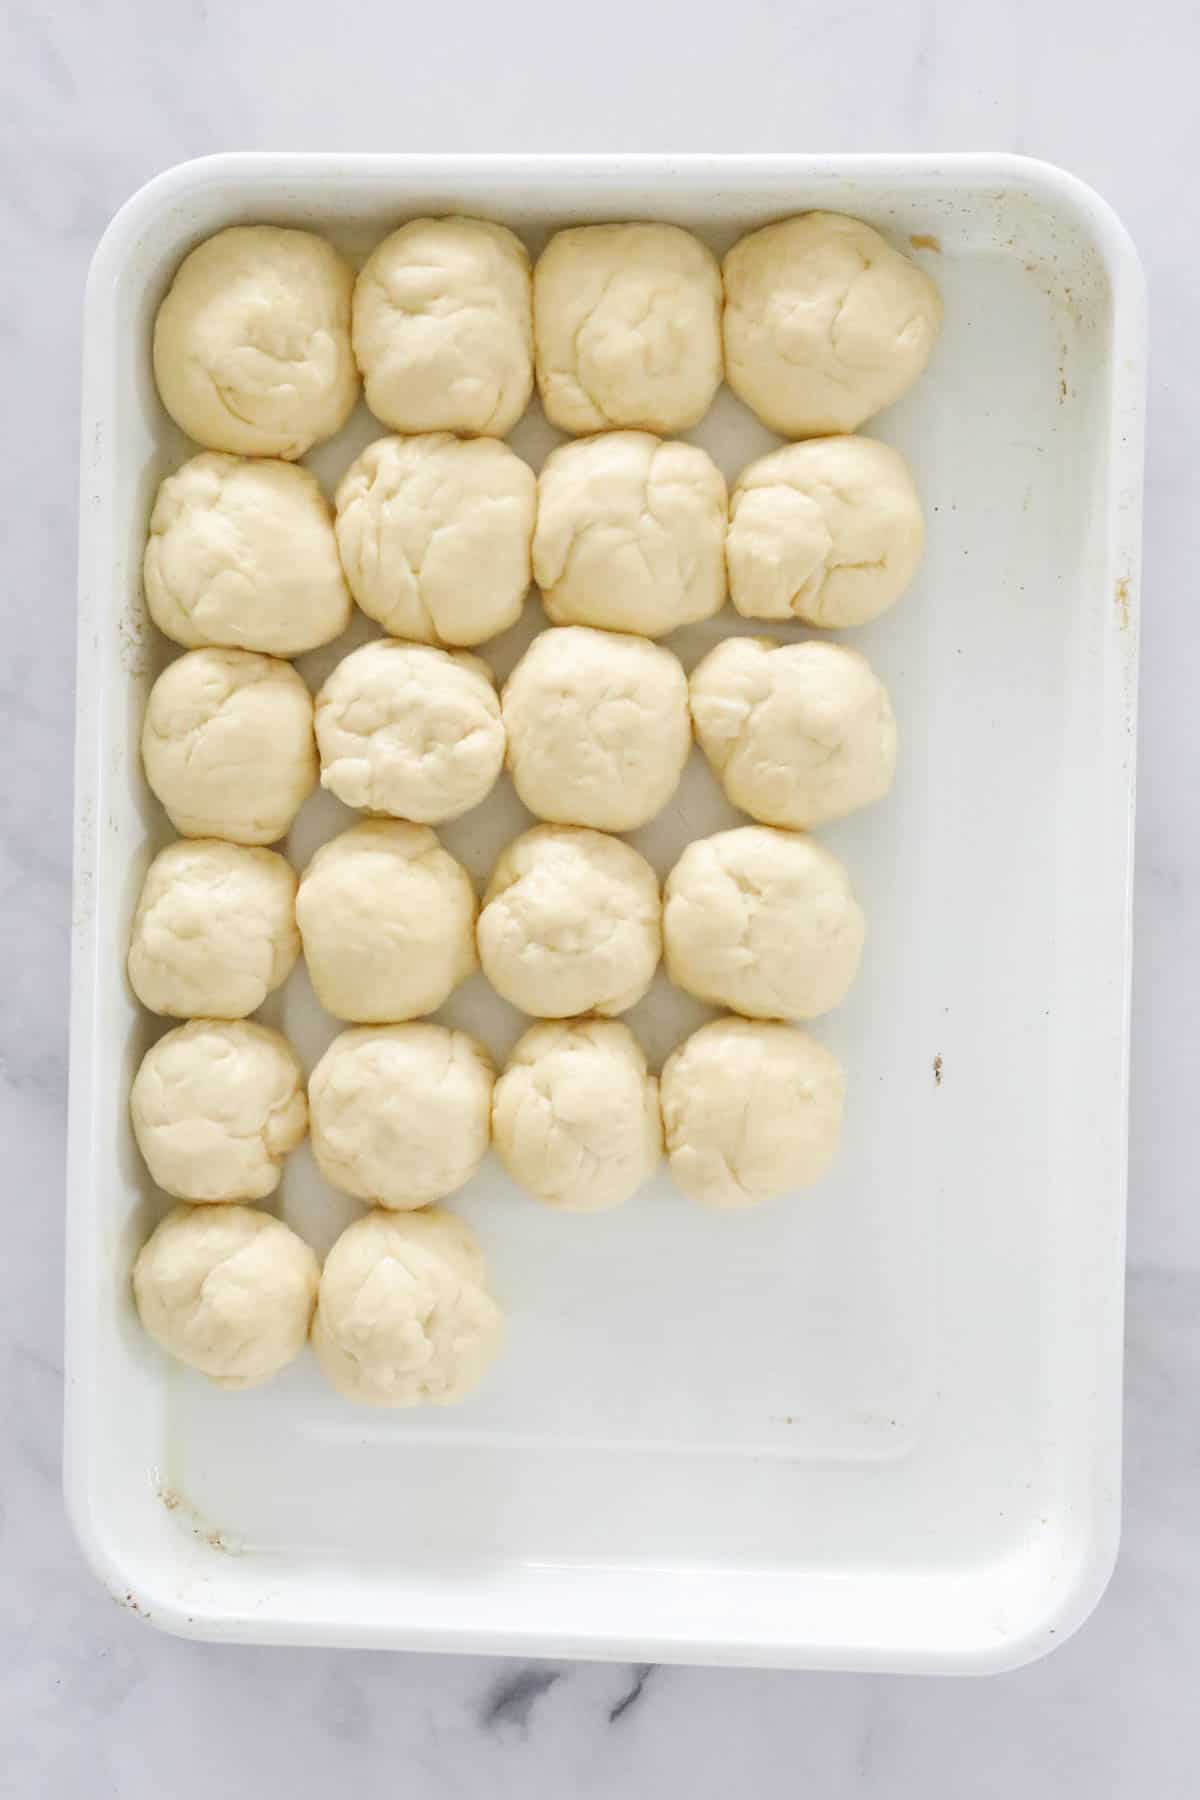 Balls of dough on a baking tray.